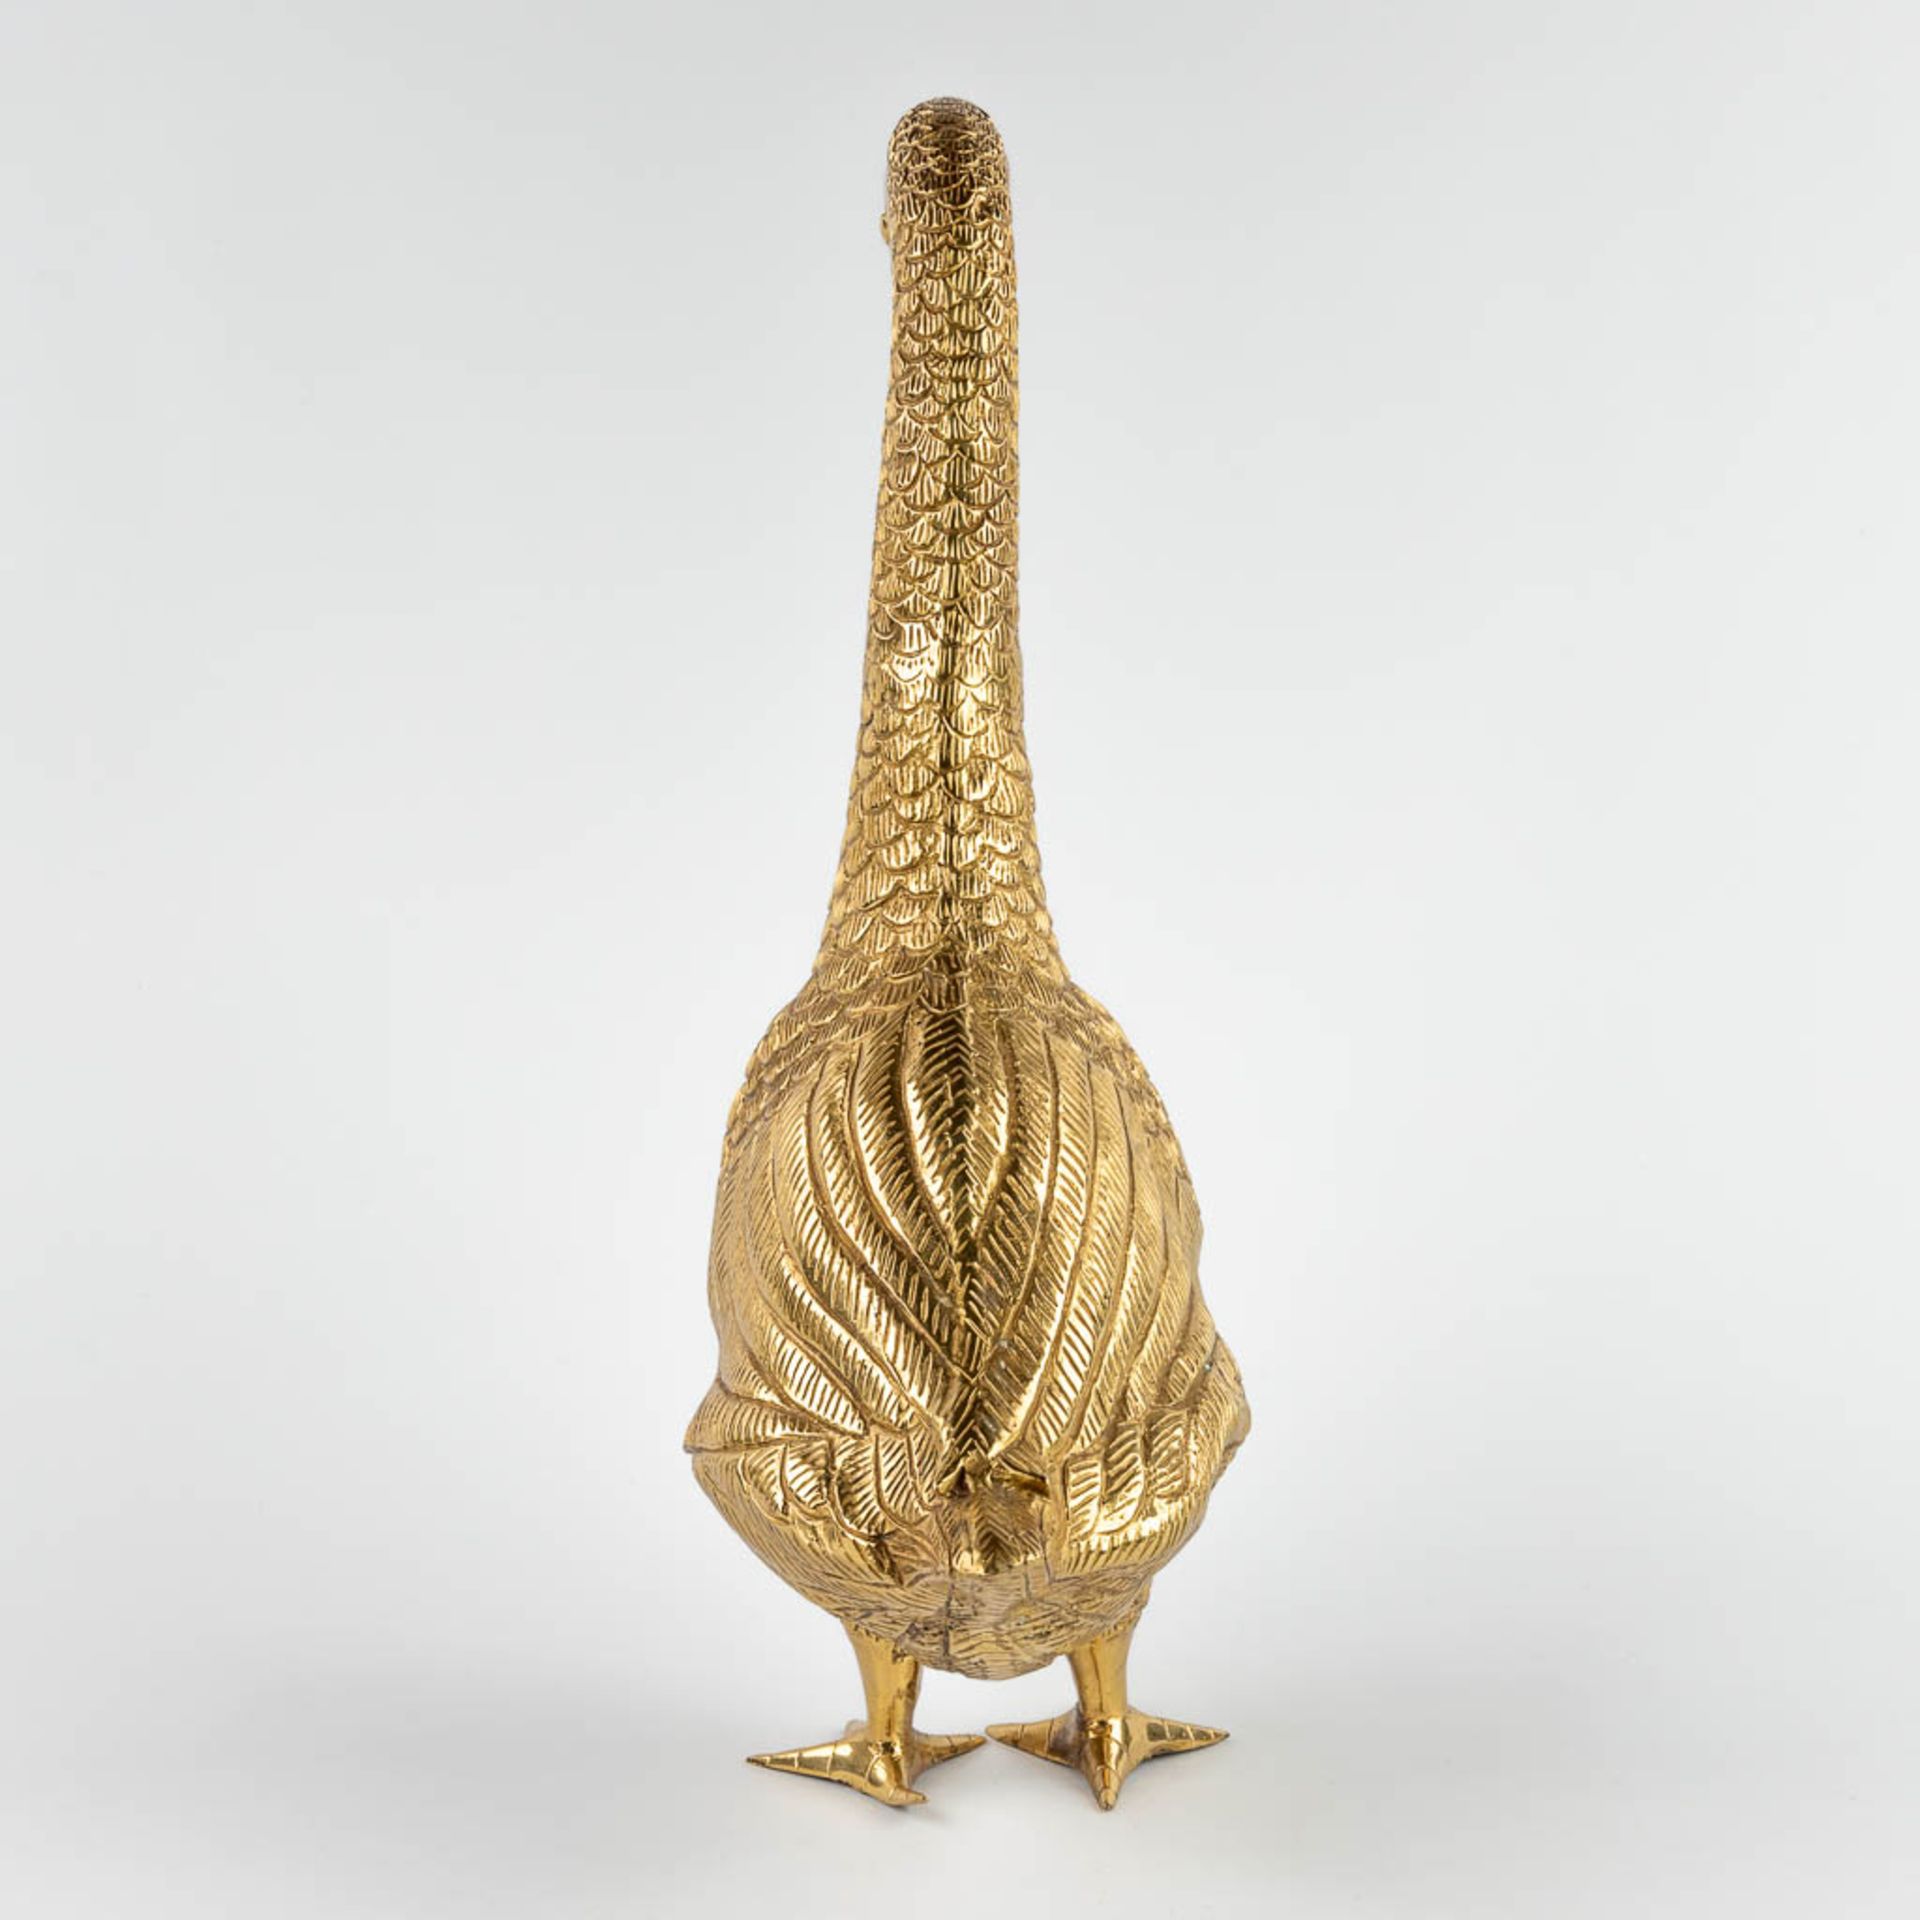 A large figurative goose, gold-plated metal. 20th C. (D:15 x W:35 x H:49,5 cm) - Bild 6 aus 11